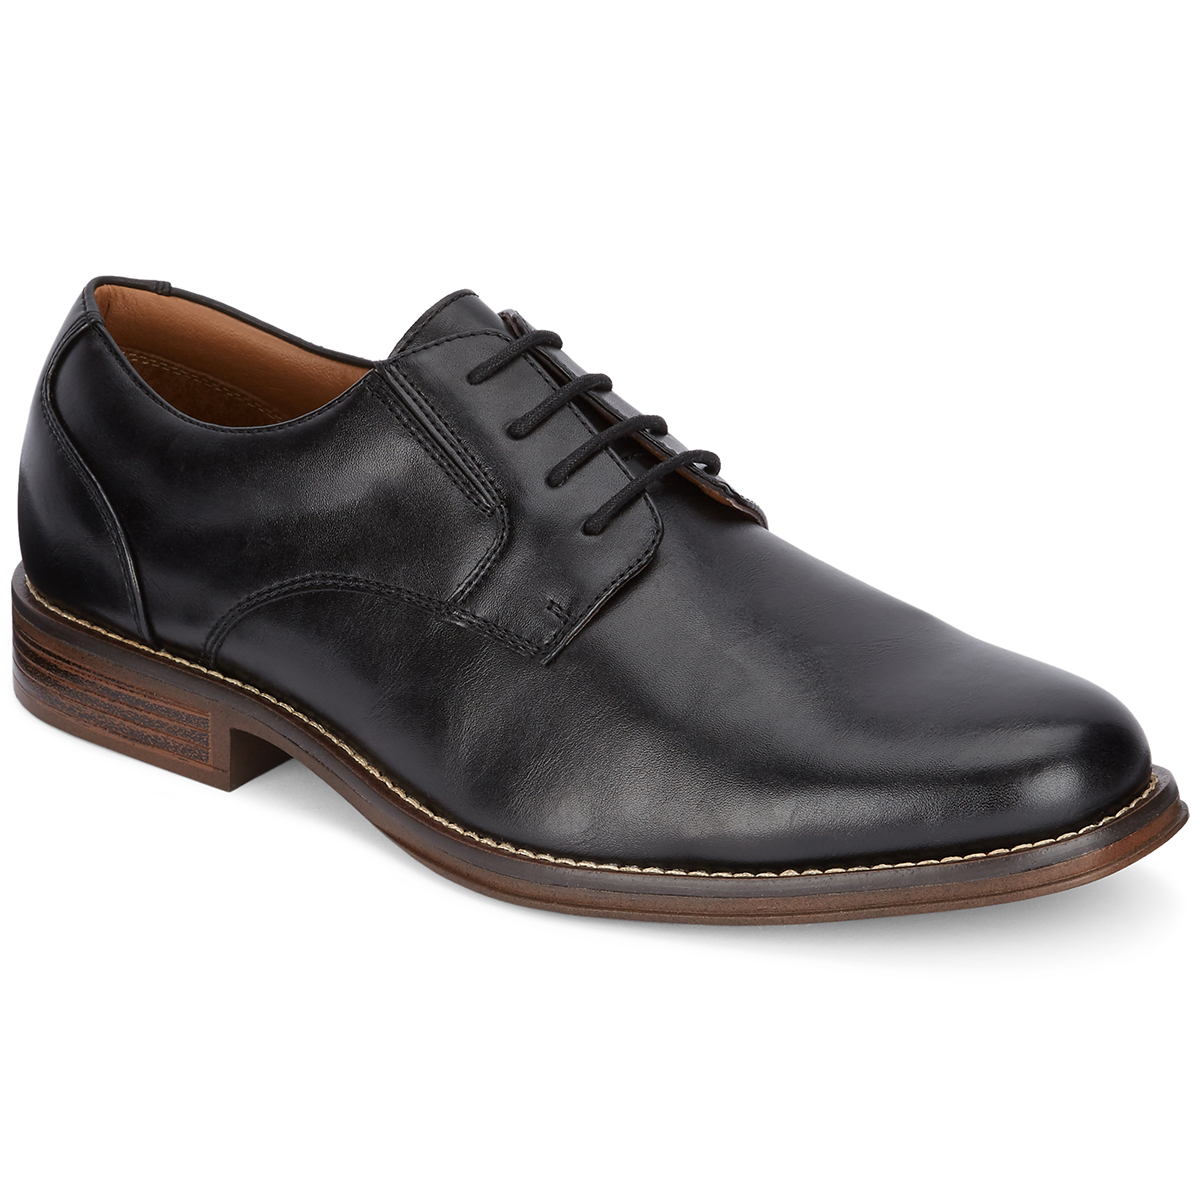 Dockers Men's Fairway Oxford Shoes, Black